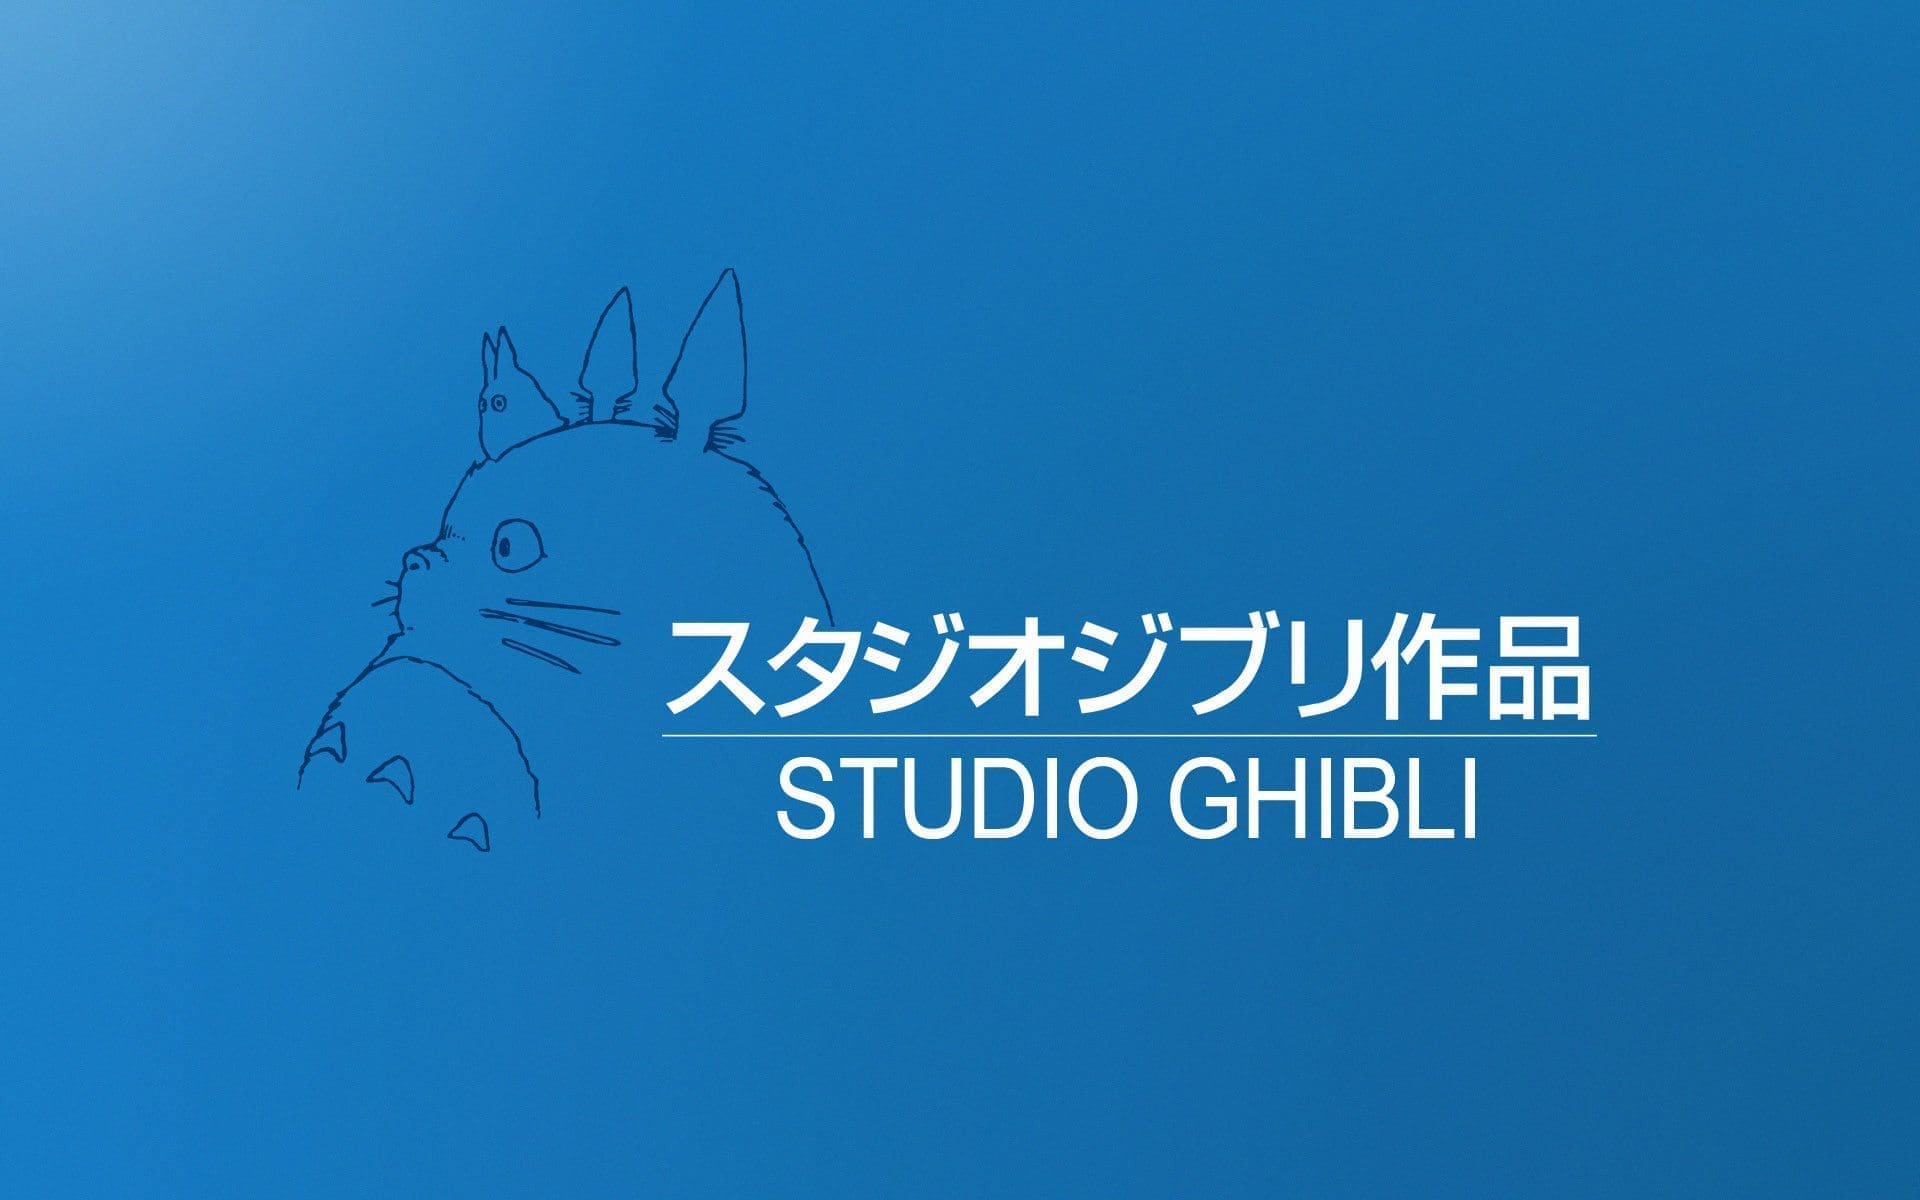 This production company is co-founded by Hayao Miyazaki and Isao Takahata